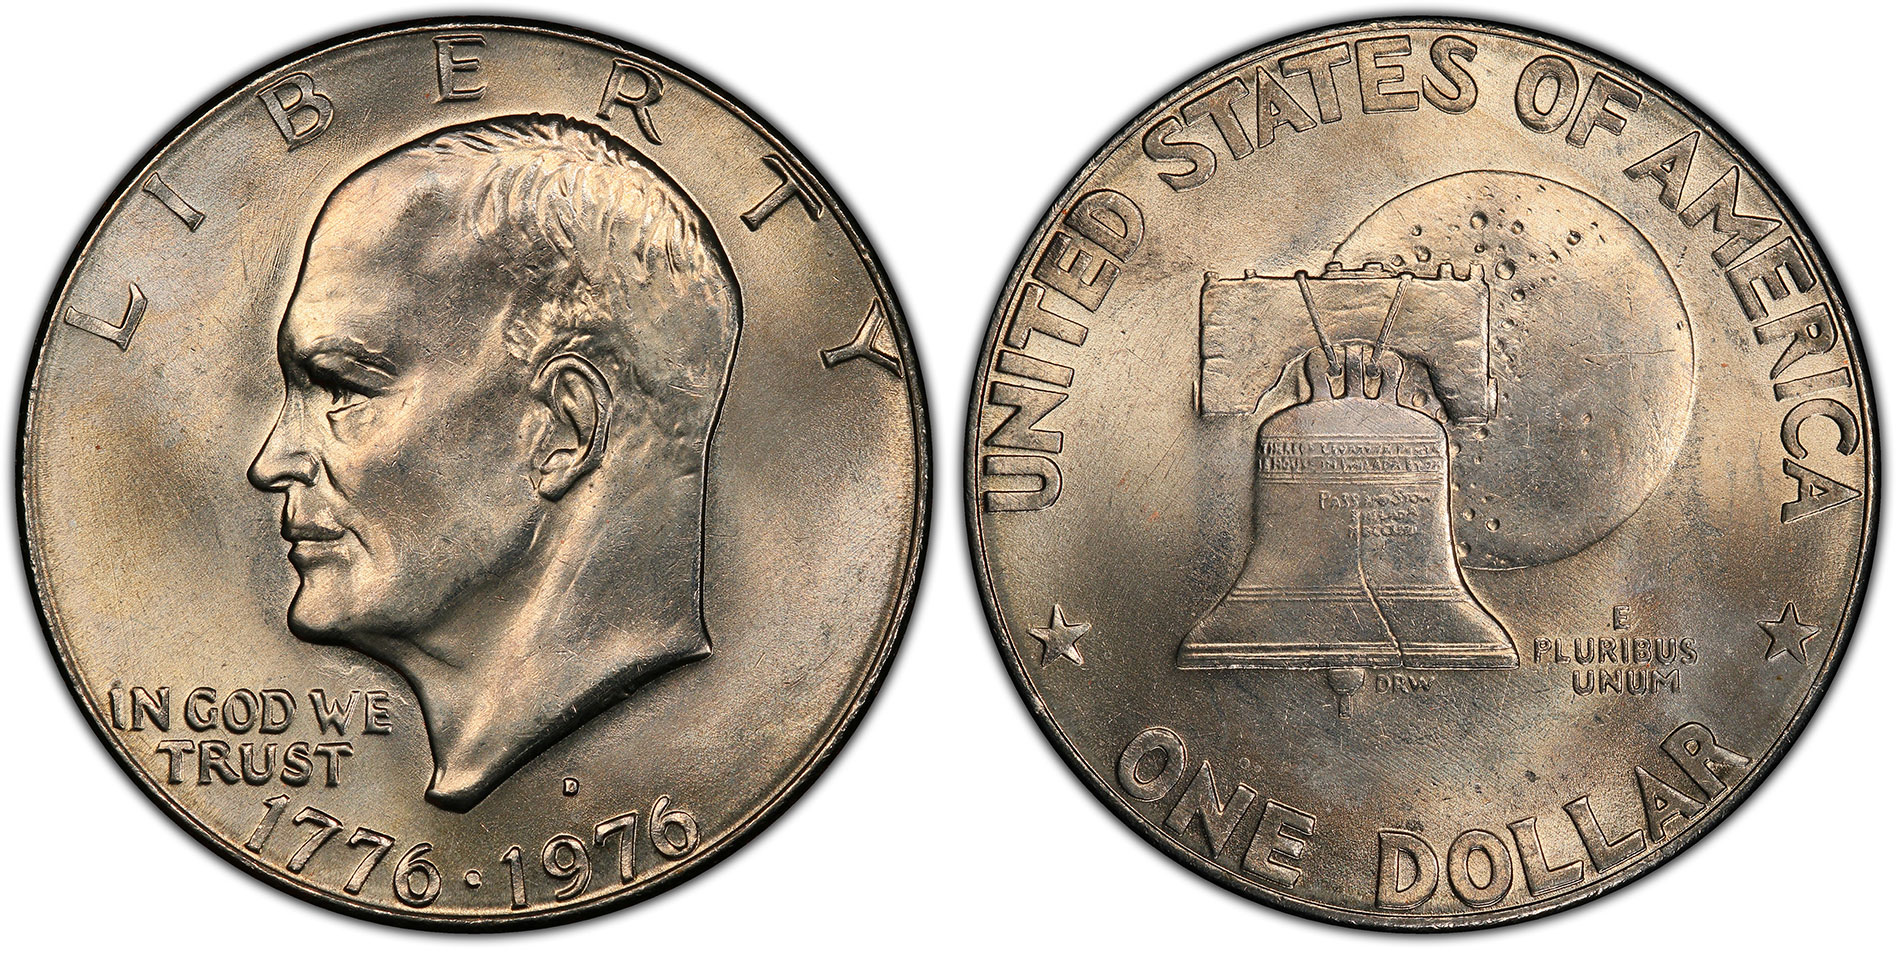 Details about   1776-1976 US Bicentennial Eisenhower Copper-Nickel Clad Dollar Coin UNC A-833 